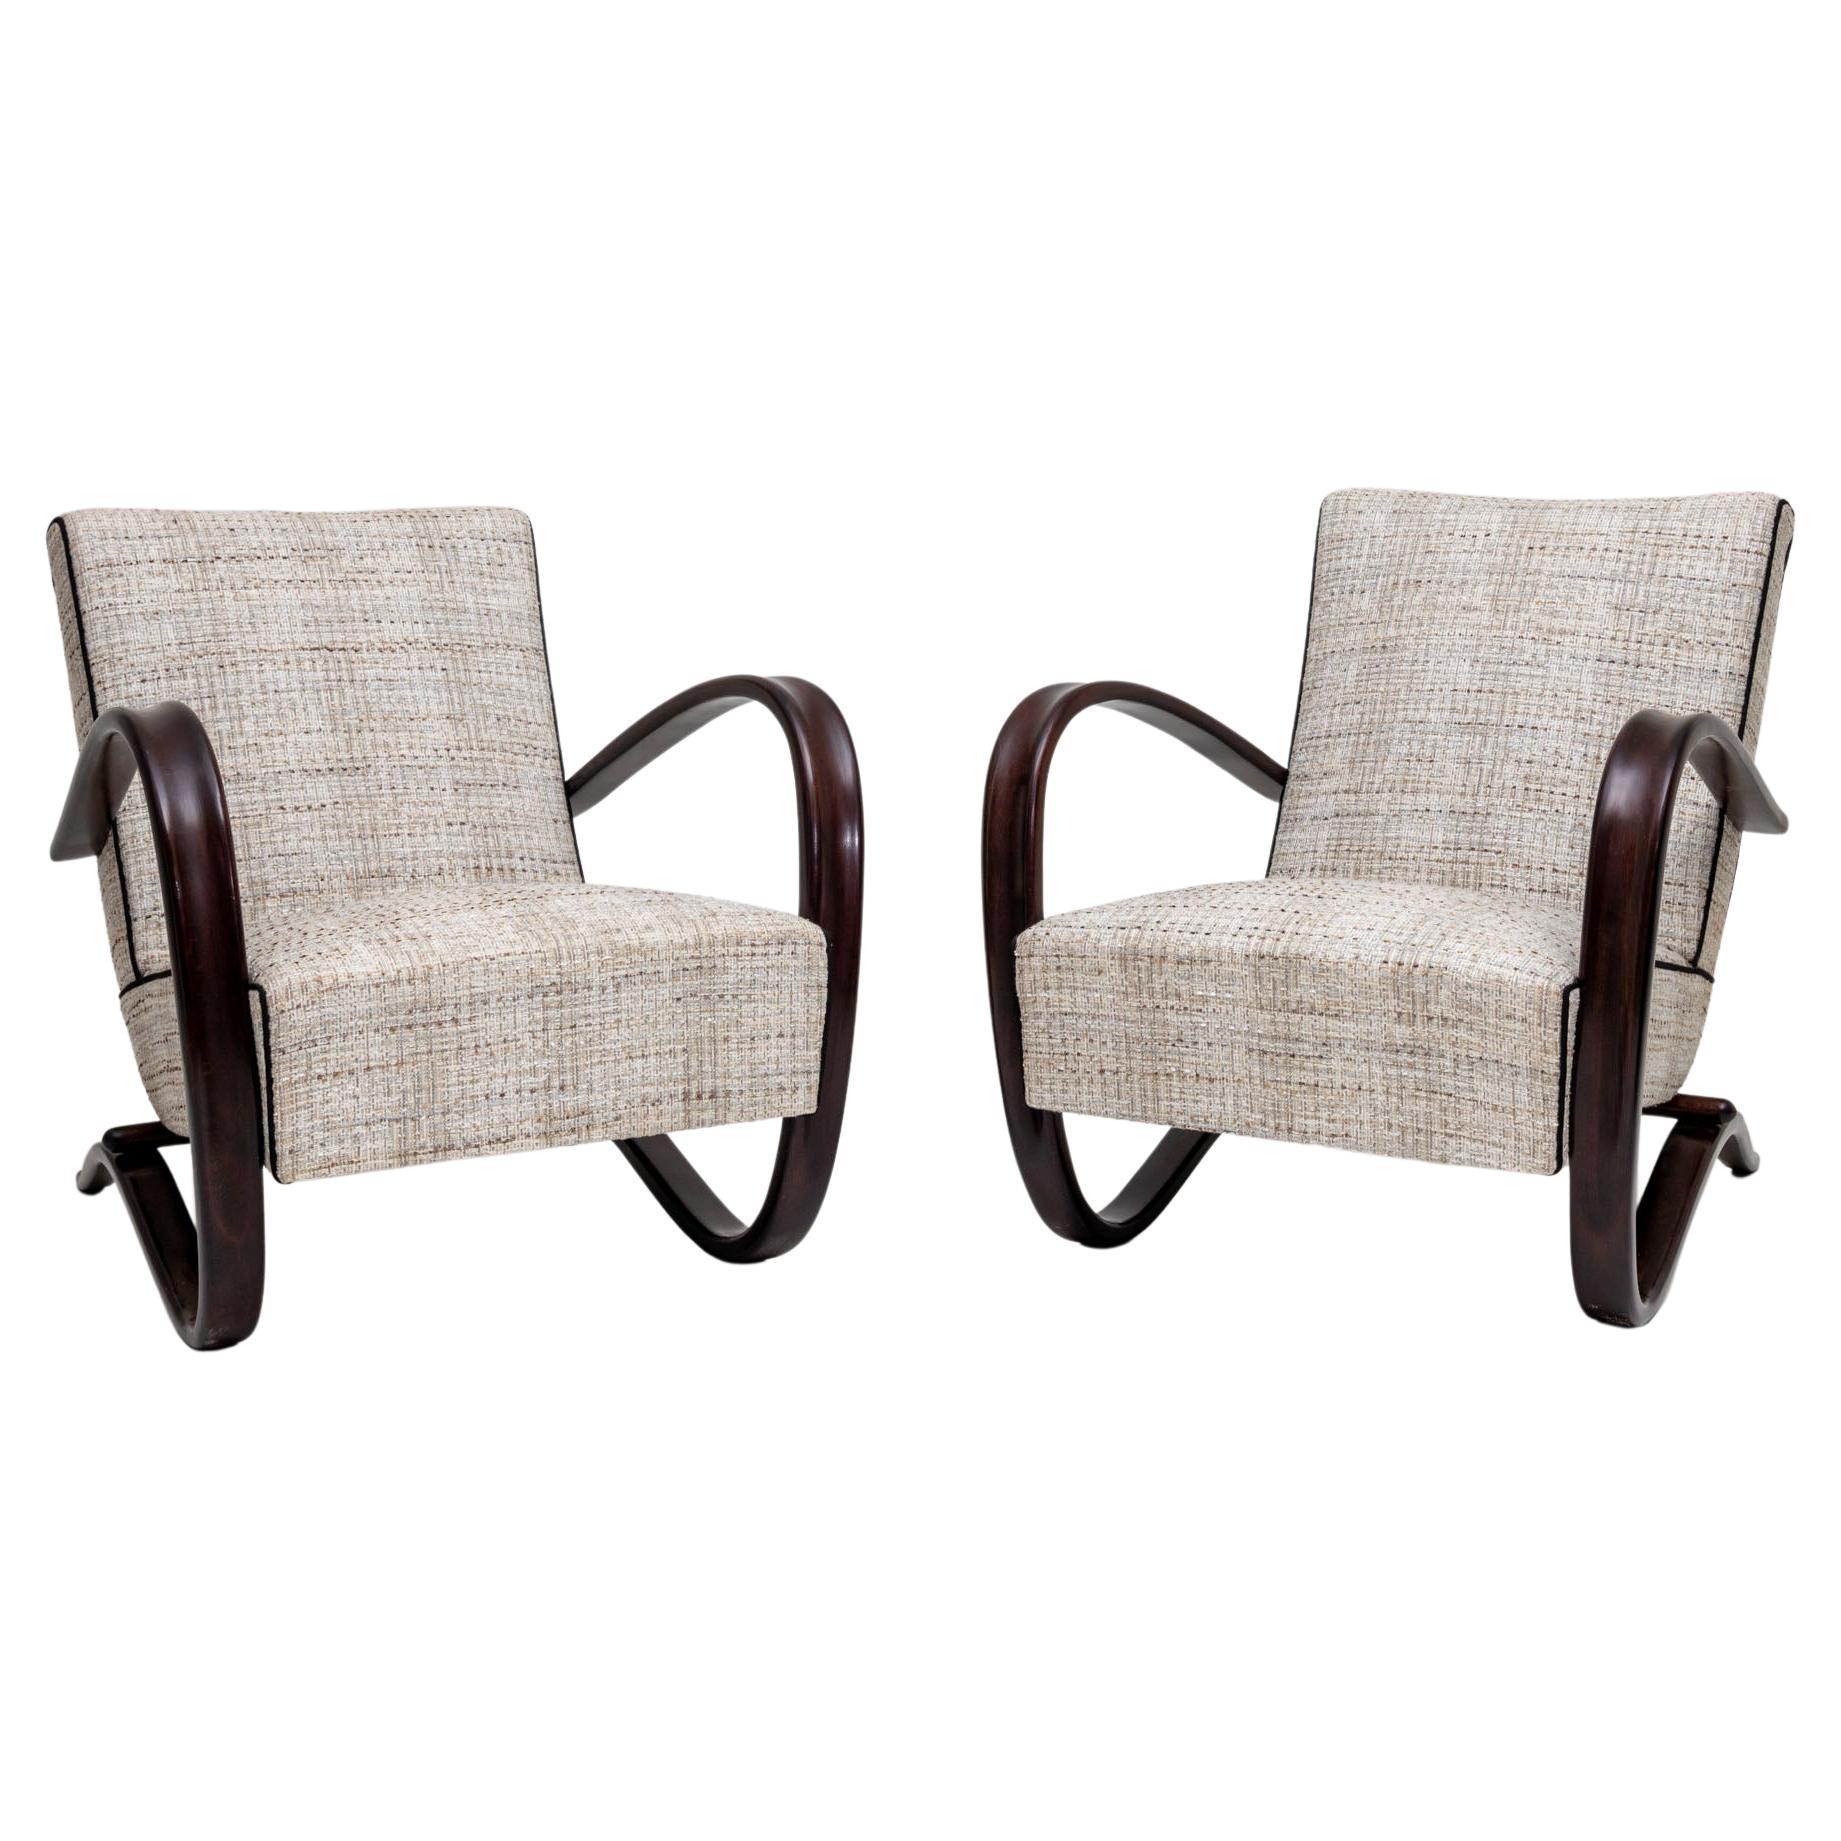 Pair of Lounge Chairs by Jindrich Halabala, Czech Republic, 1930s